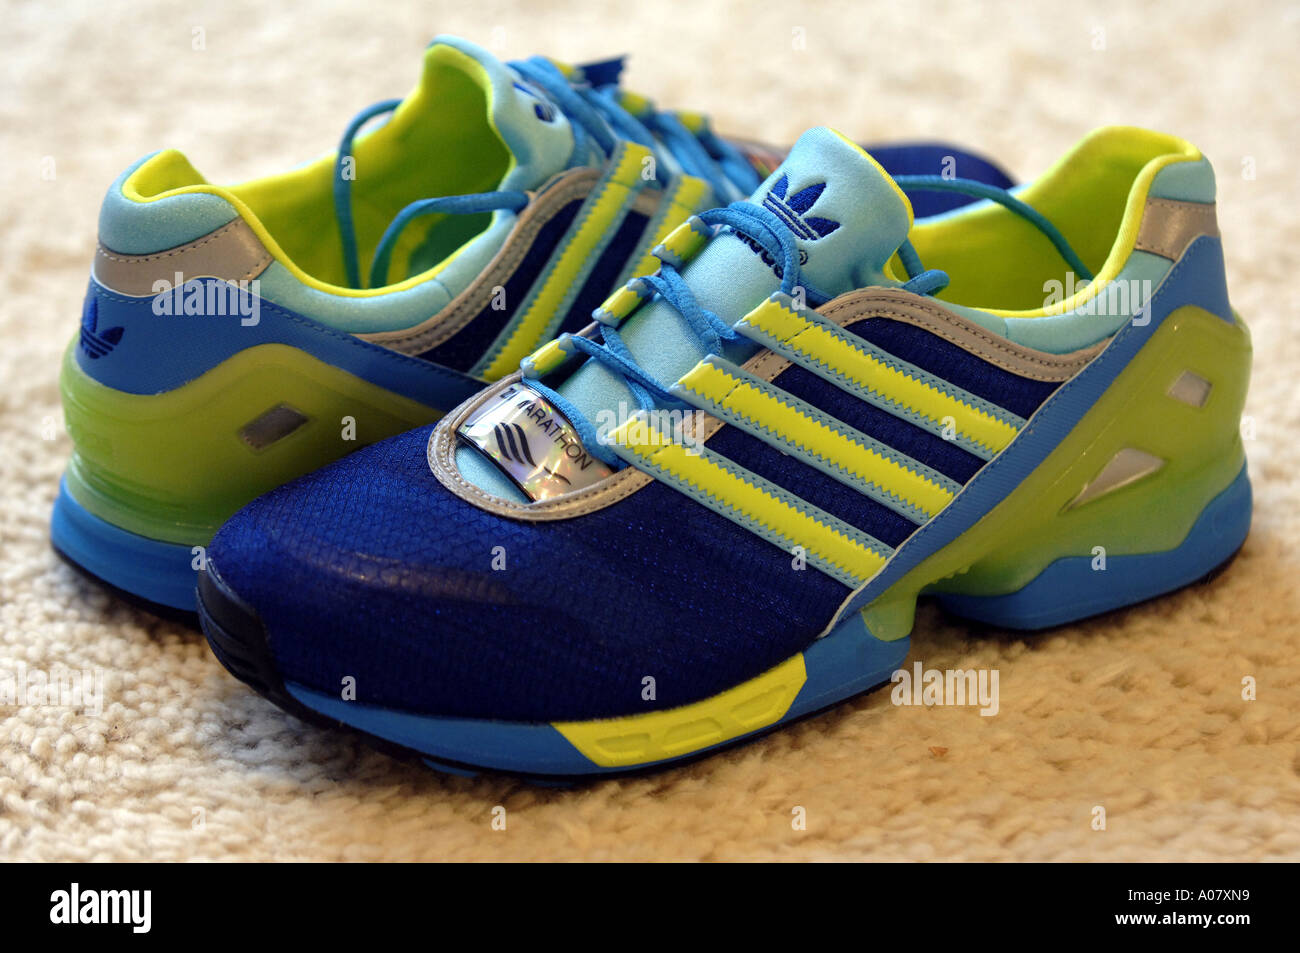 Adidas Training Schuhe moderne neue Grün Blau Fluorscent hell lebhaft  Marathon design Stockfotografie - Alamy